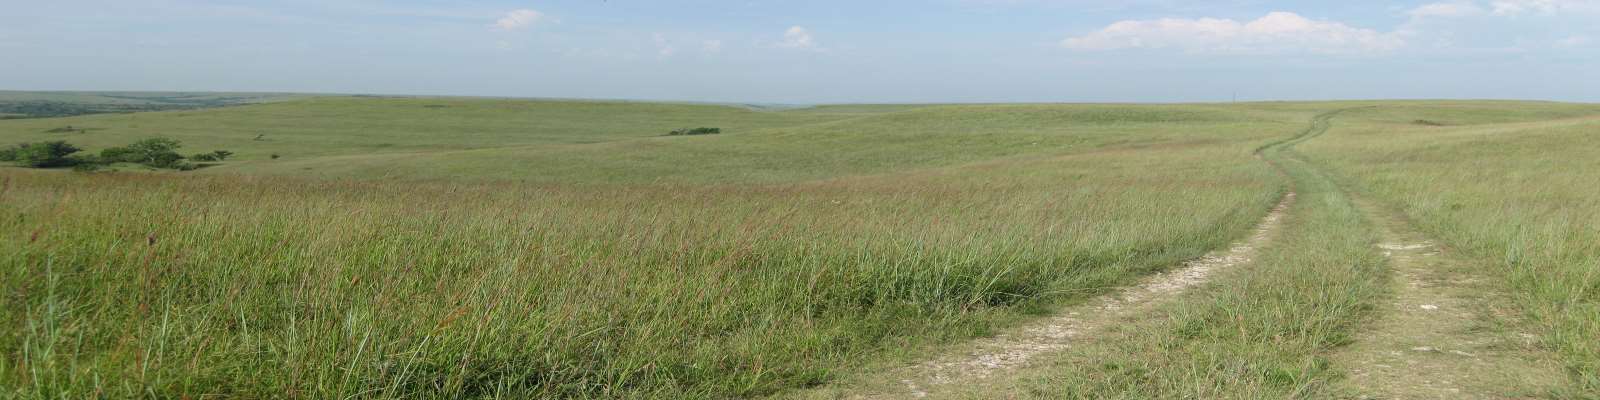 Tall grass prairie photo taken by theMuse